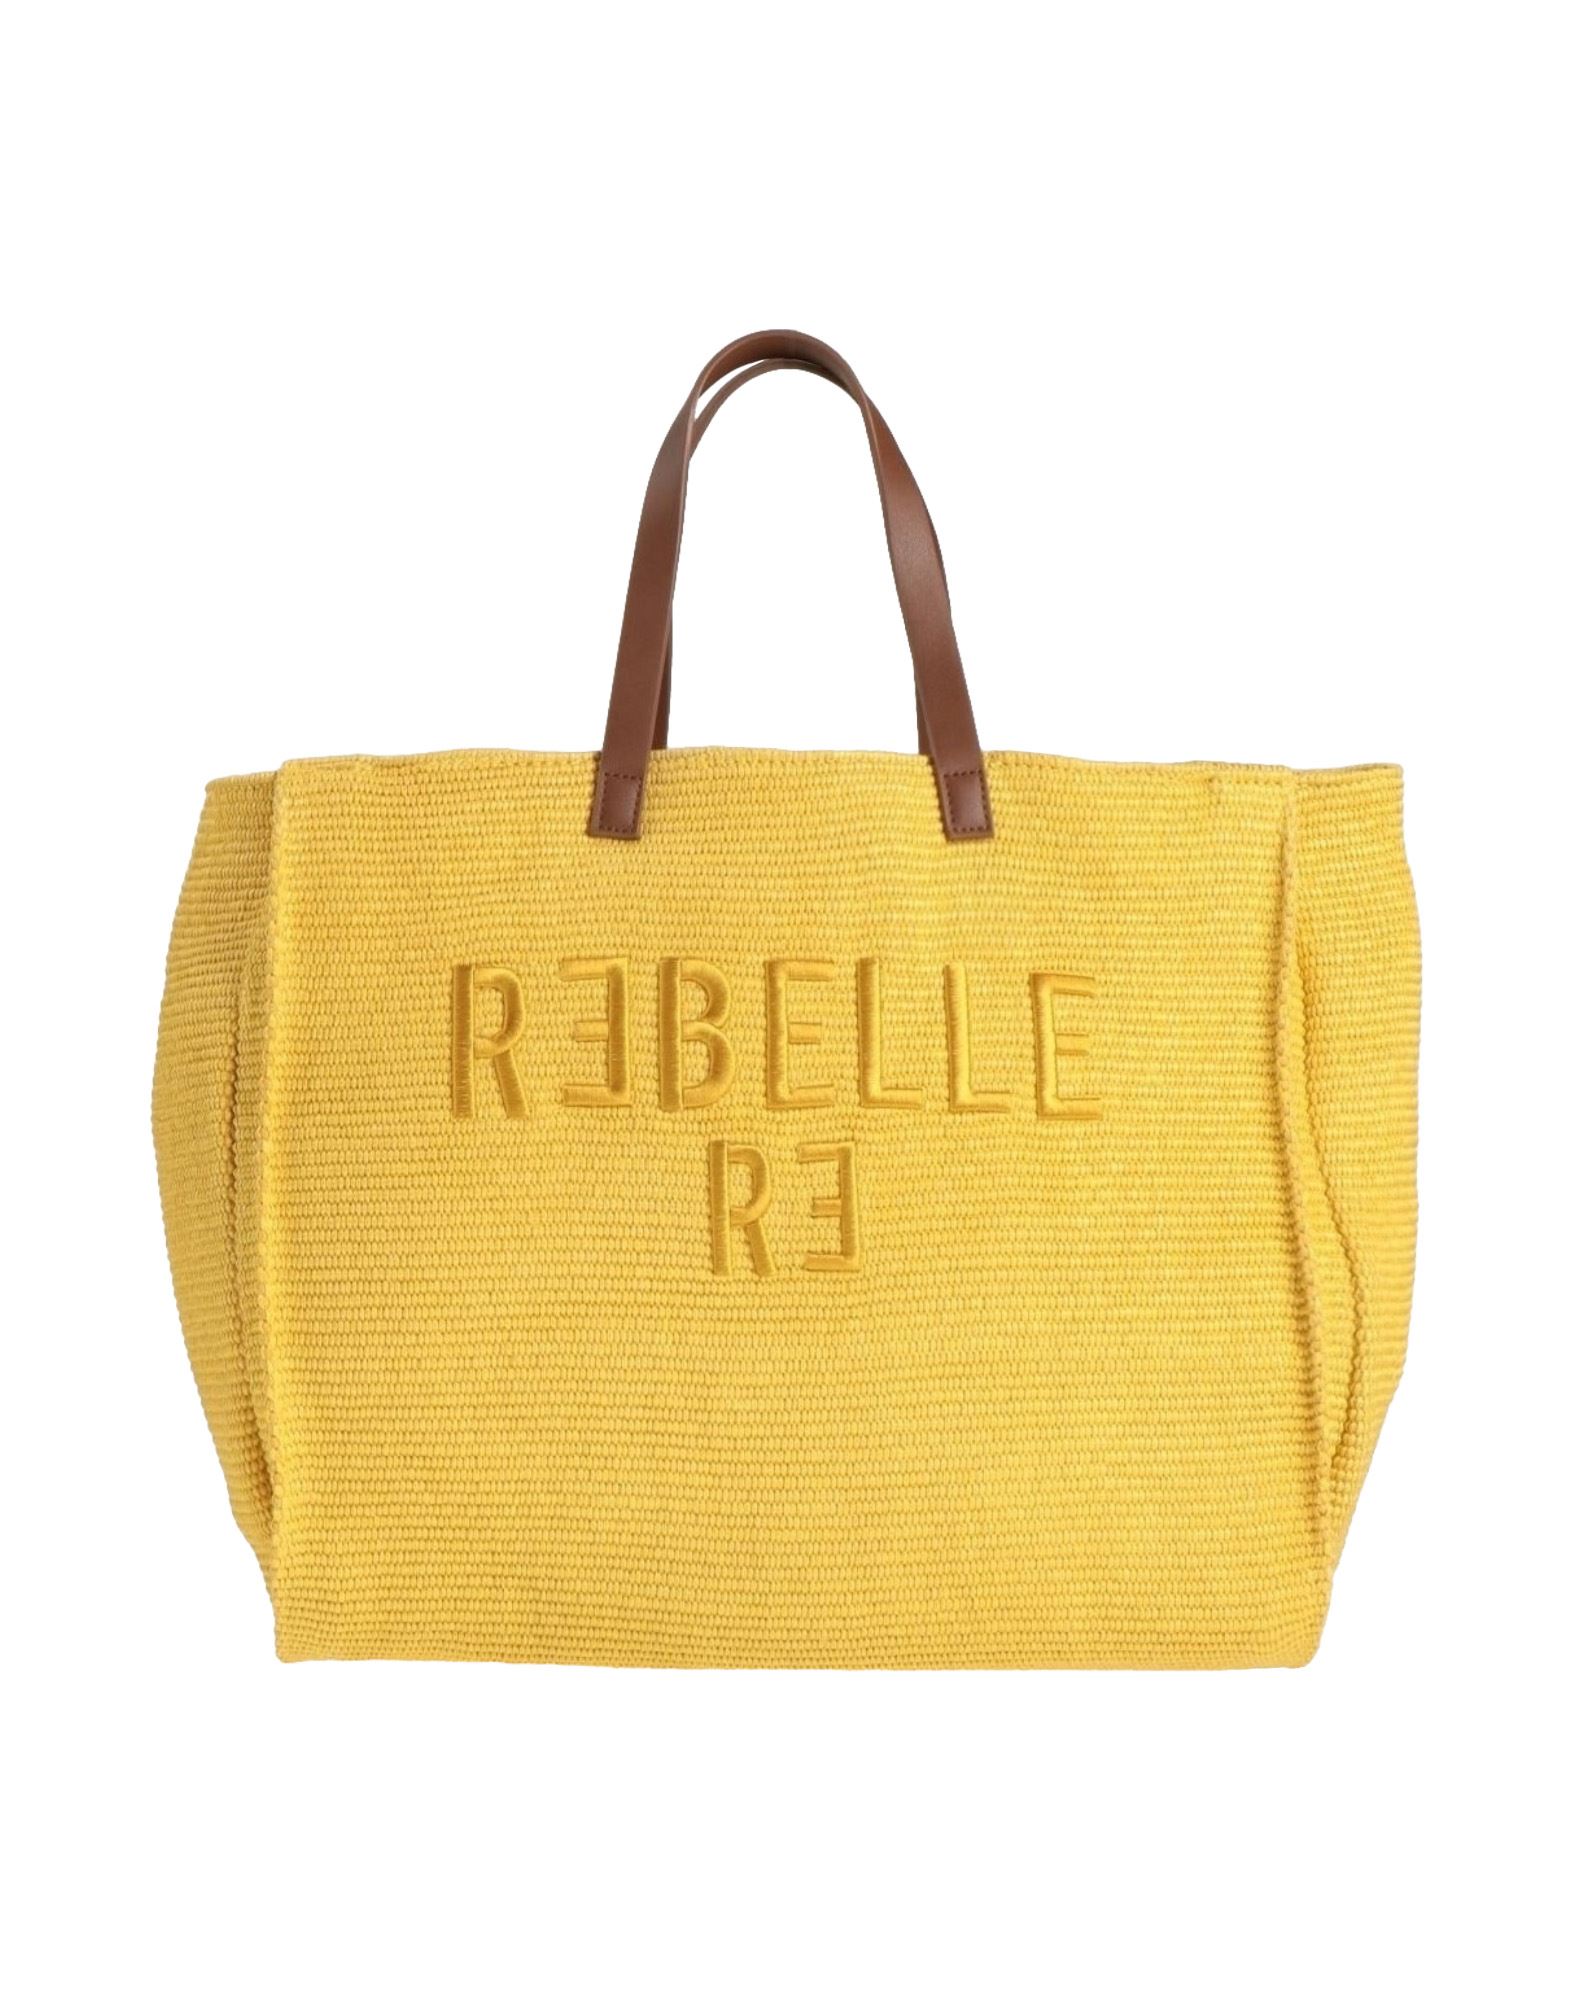 Rebelle Handbags In Yellow